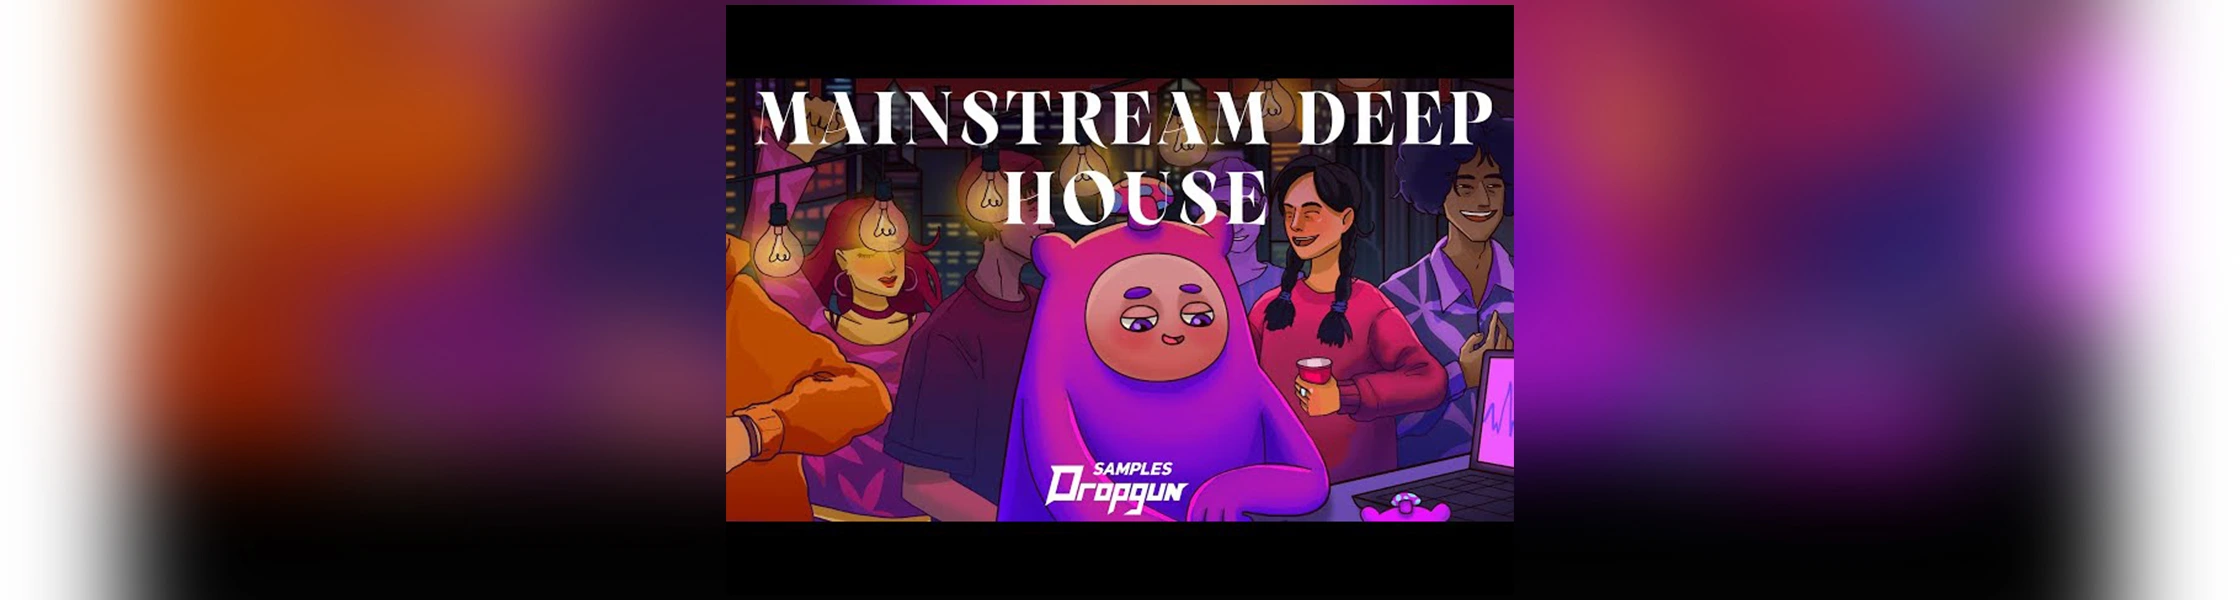 Dropgun Samples Mainstream Deep House